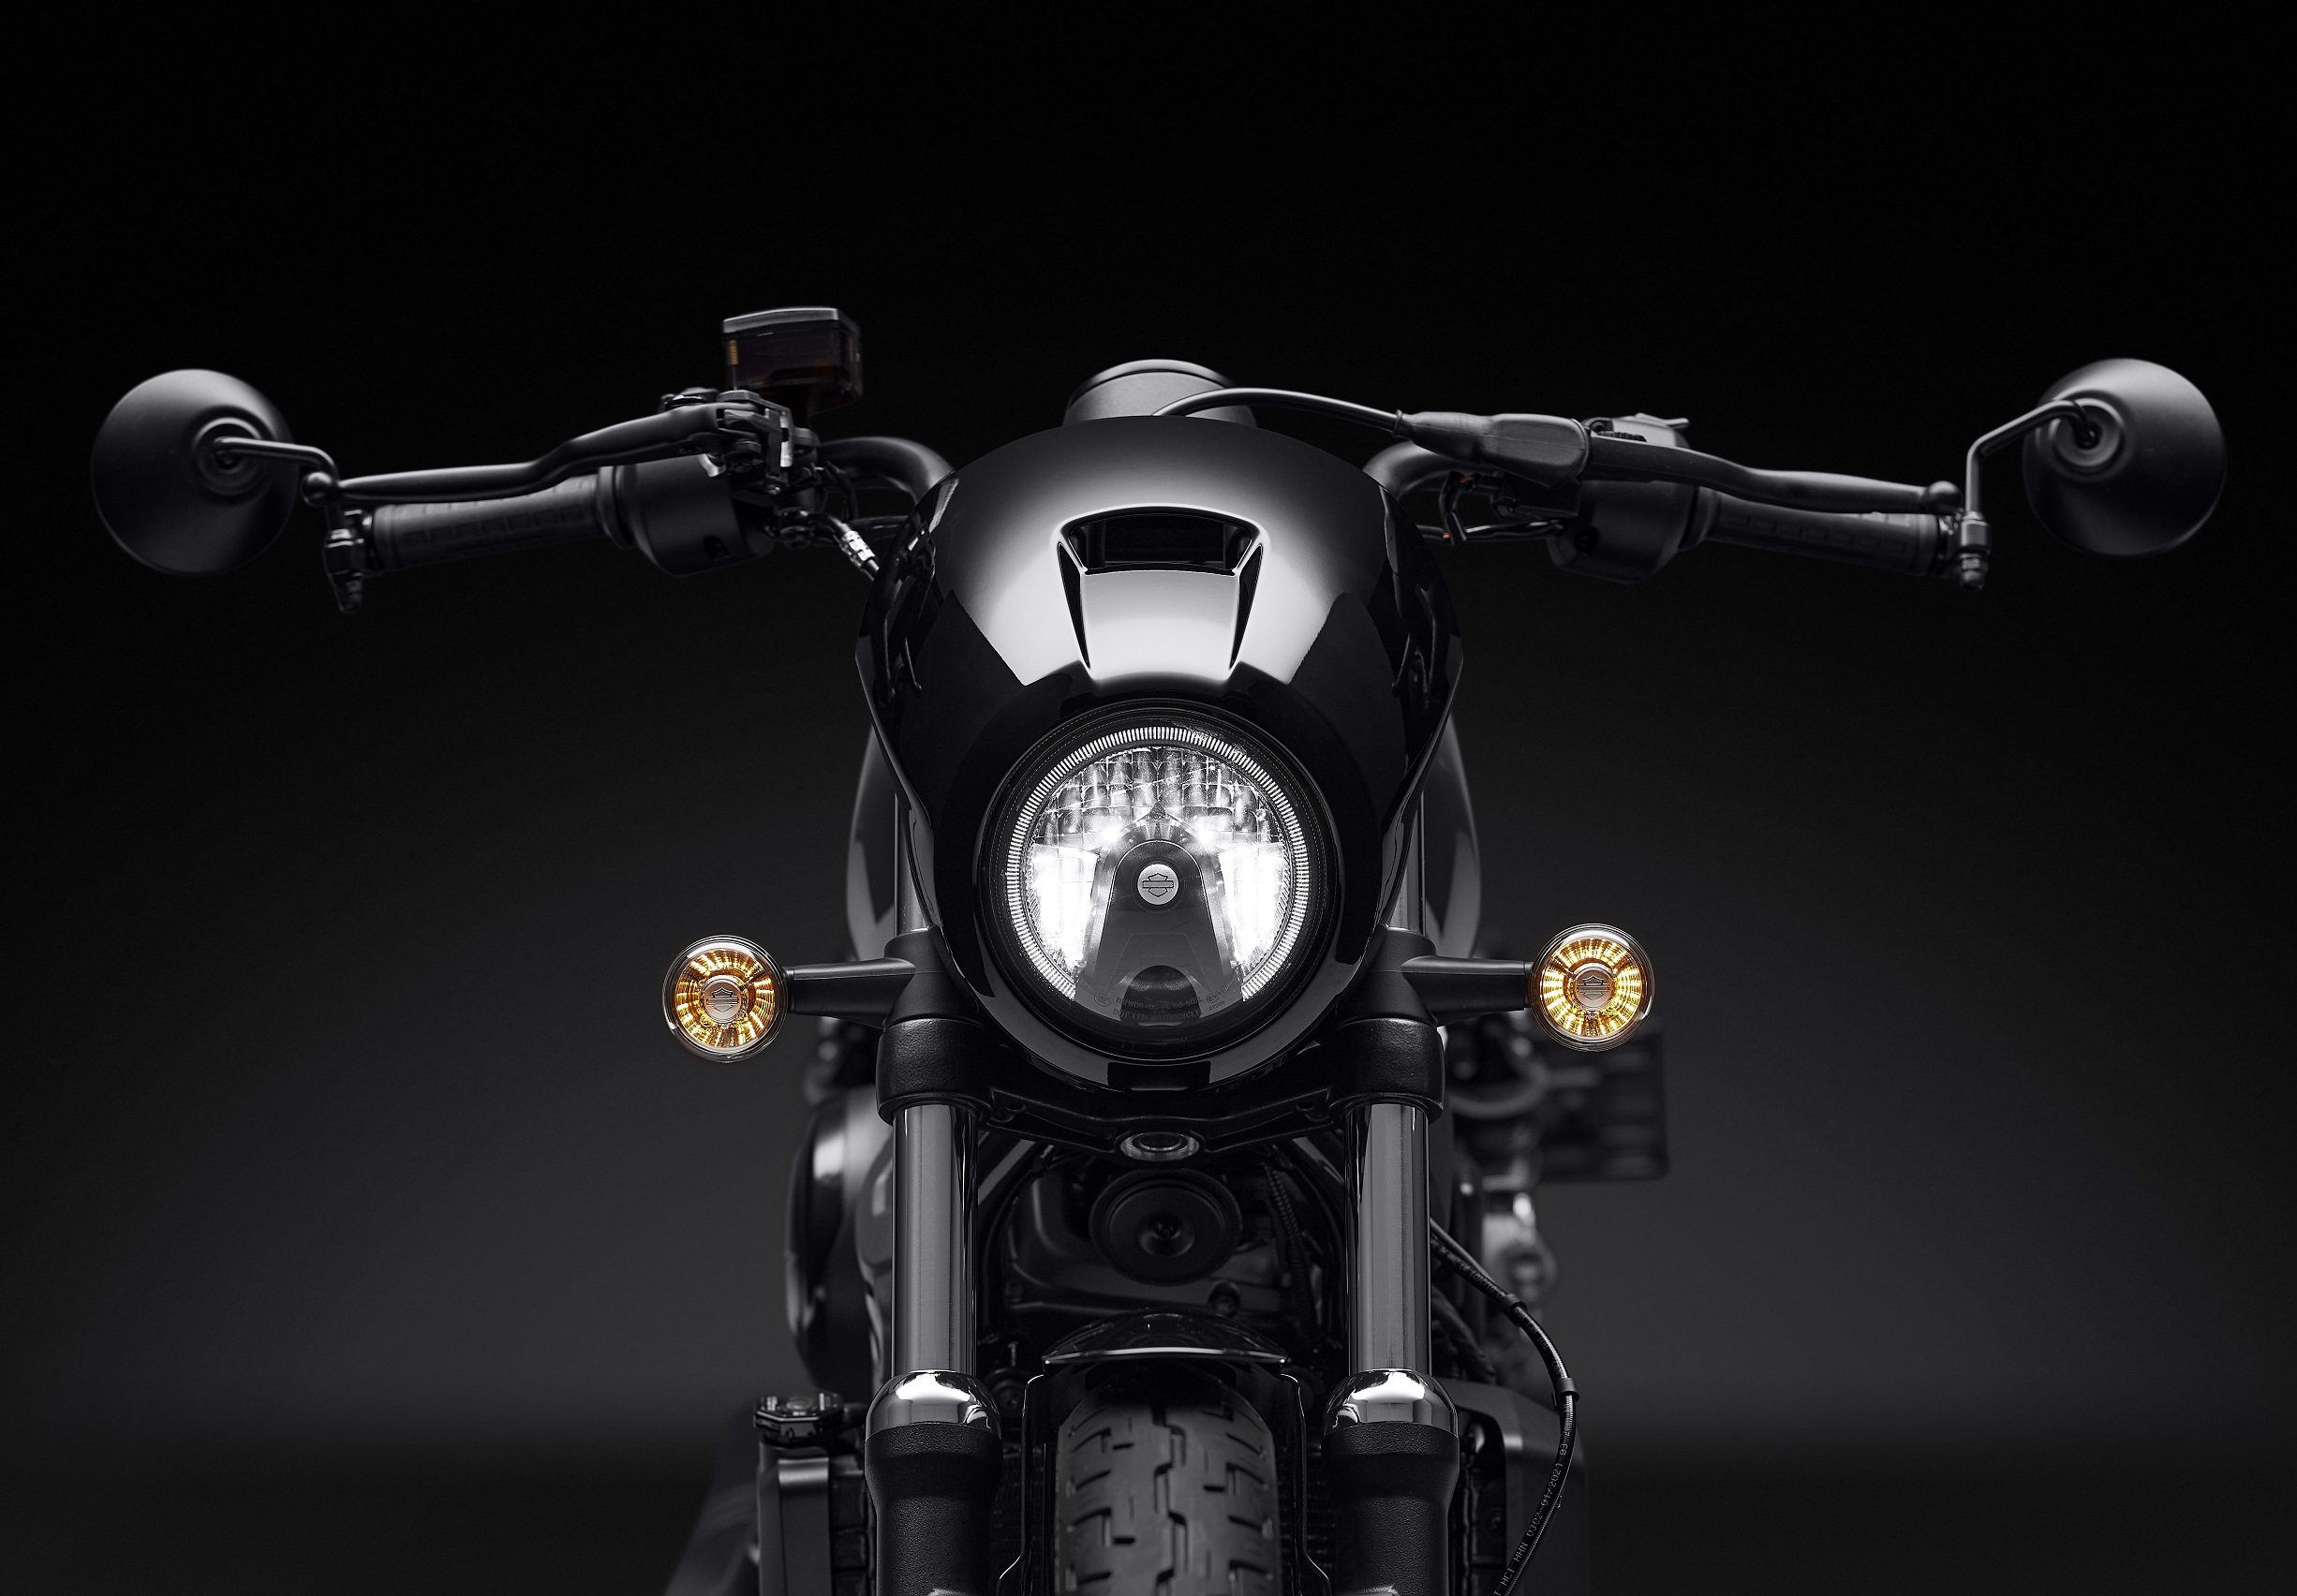 Harley Davidson Sportster Nightster